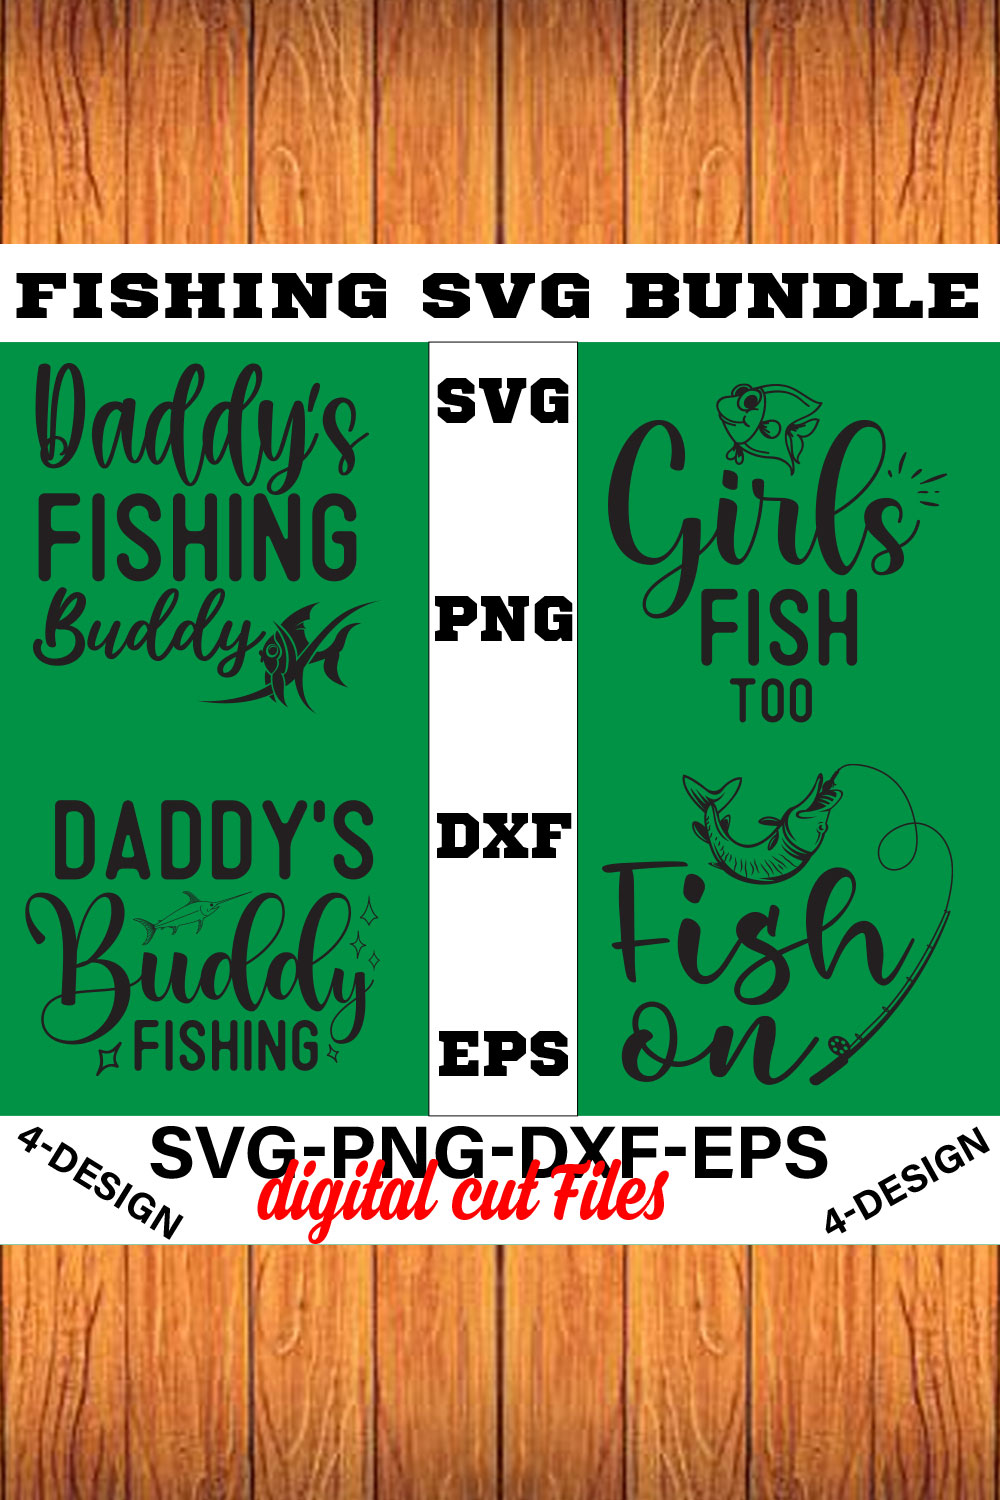 Fishing Design Bundle PNG ONLY, SVG bundle, Fishing svg, Fishing life Volume-01 pinterest preview image.